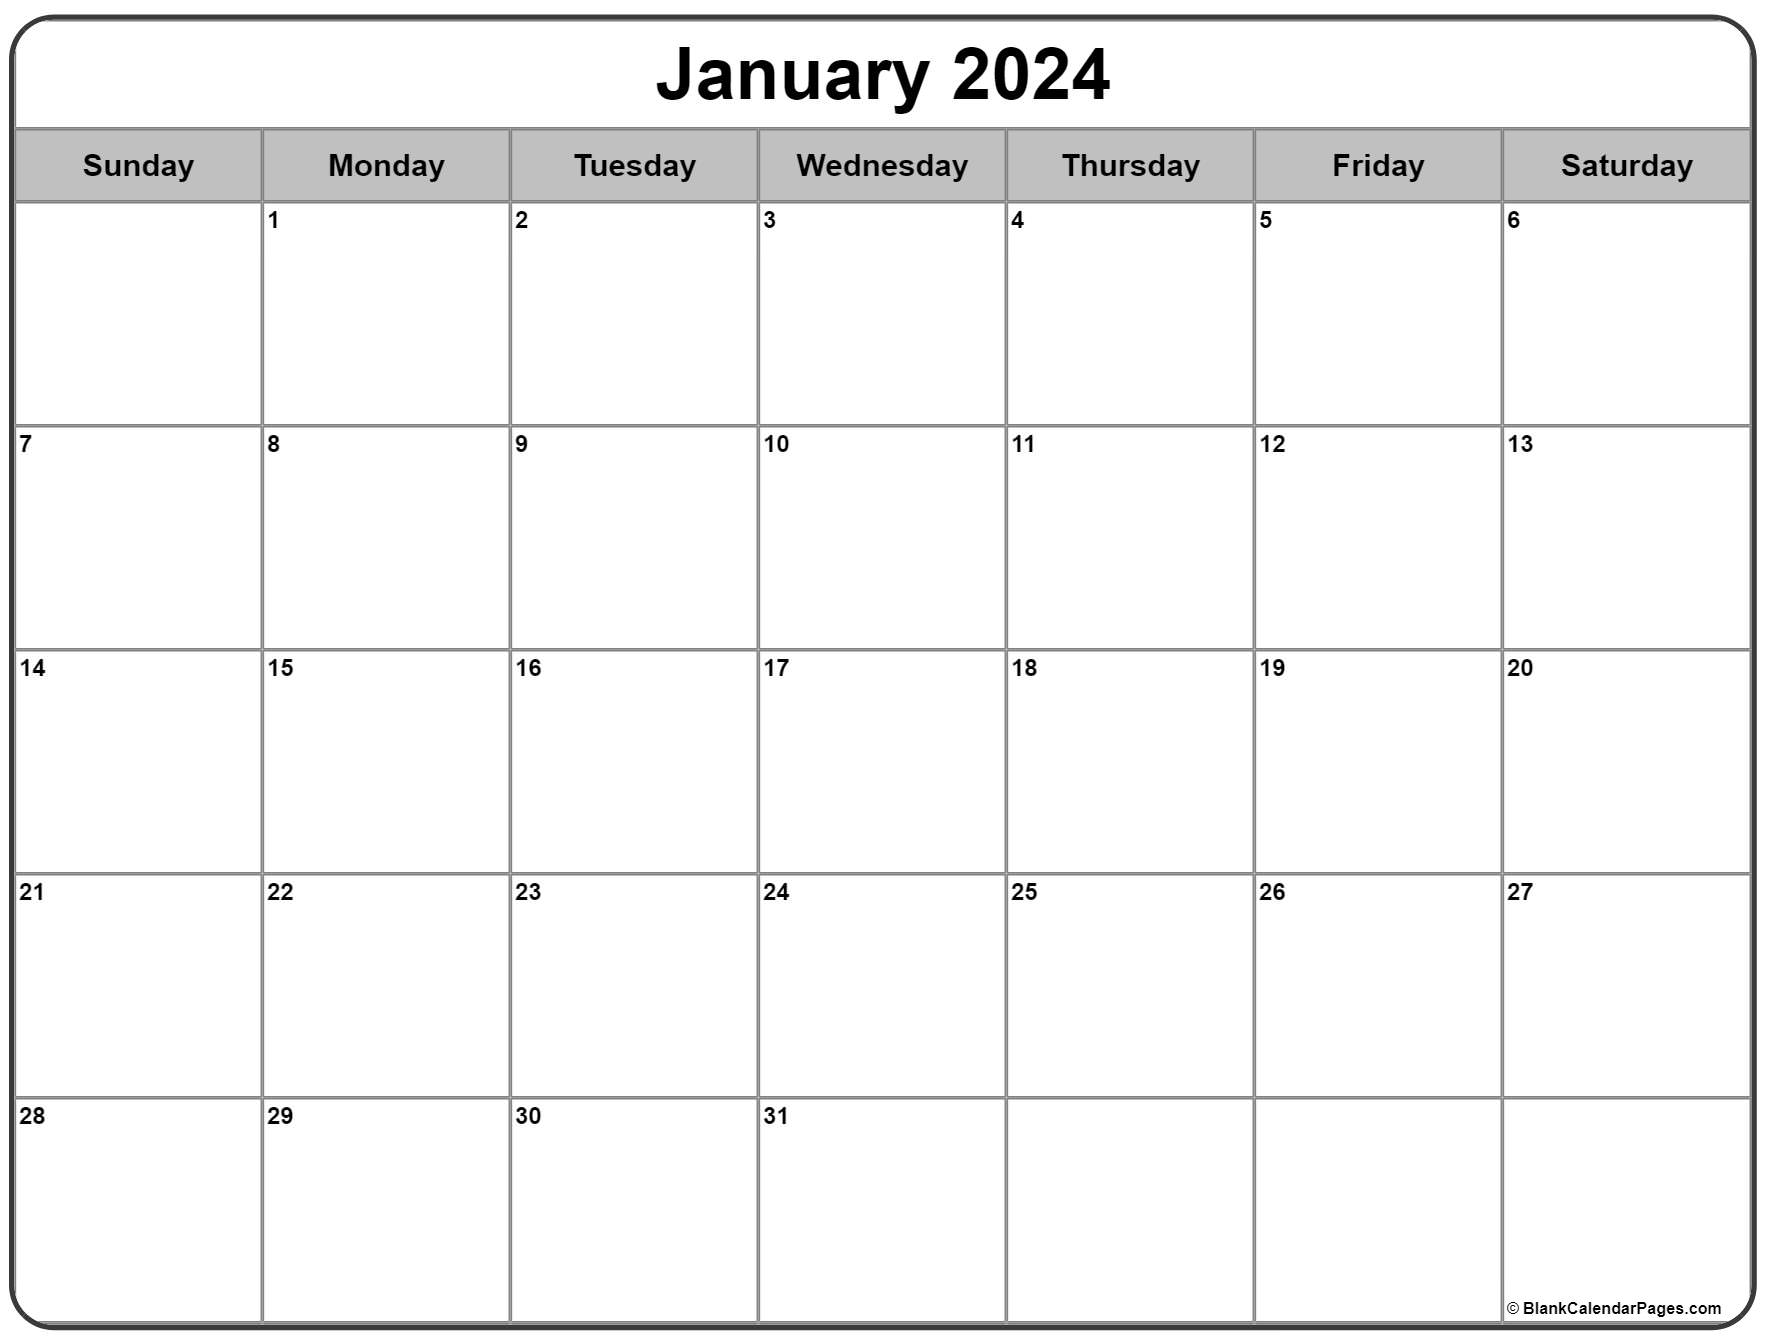 january-2024-calendar-free-printable-calendar